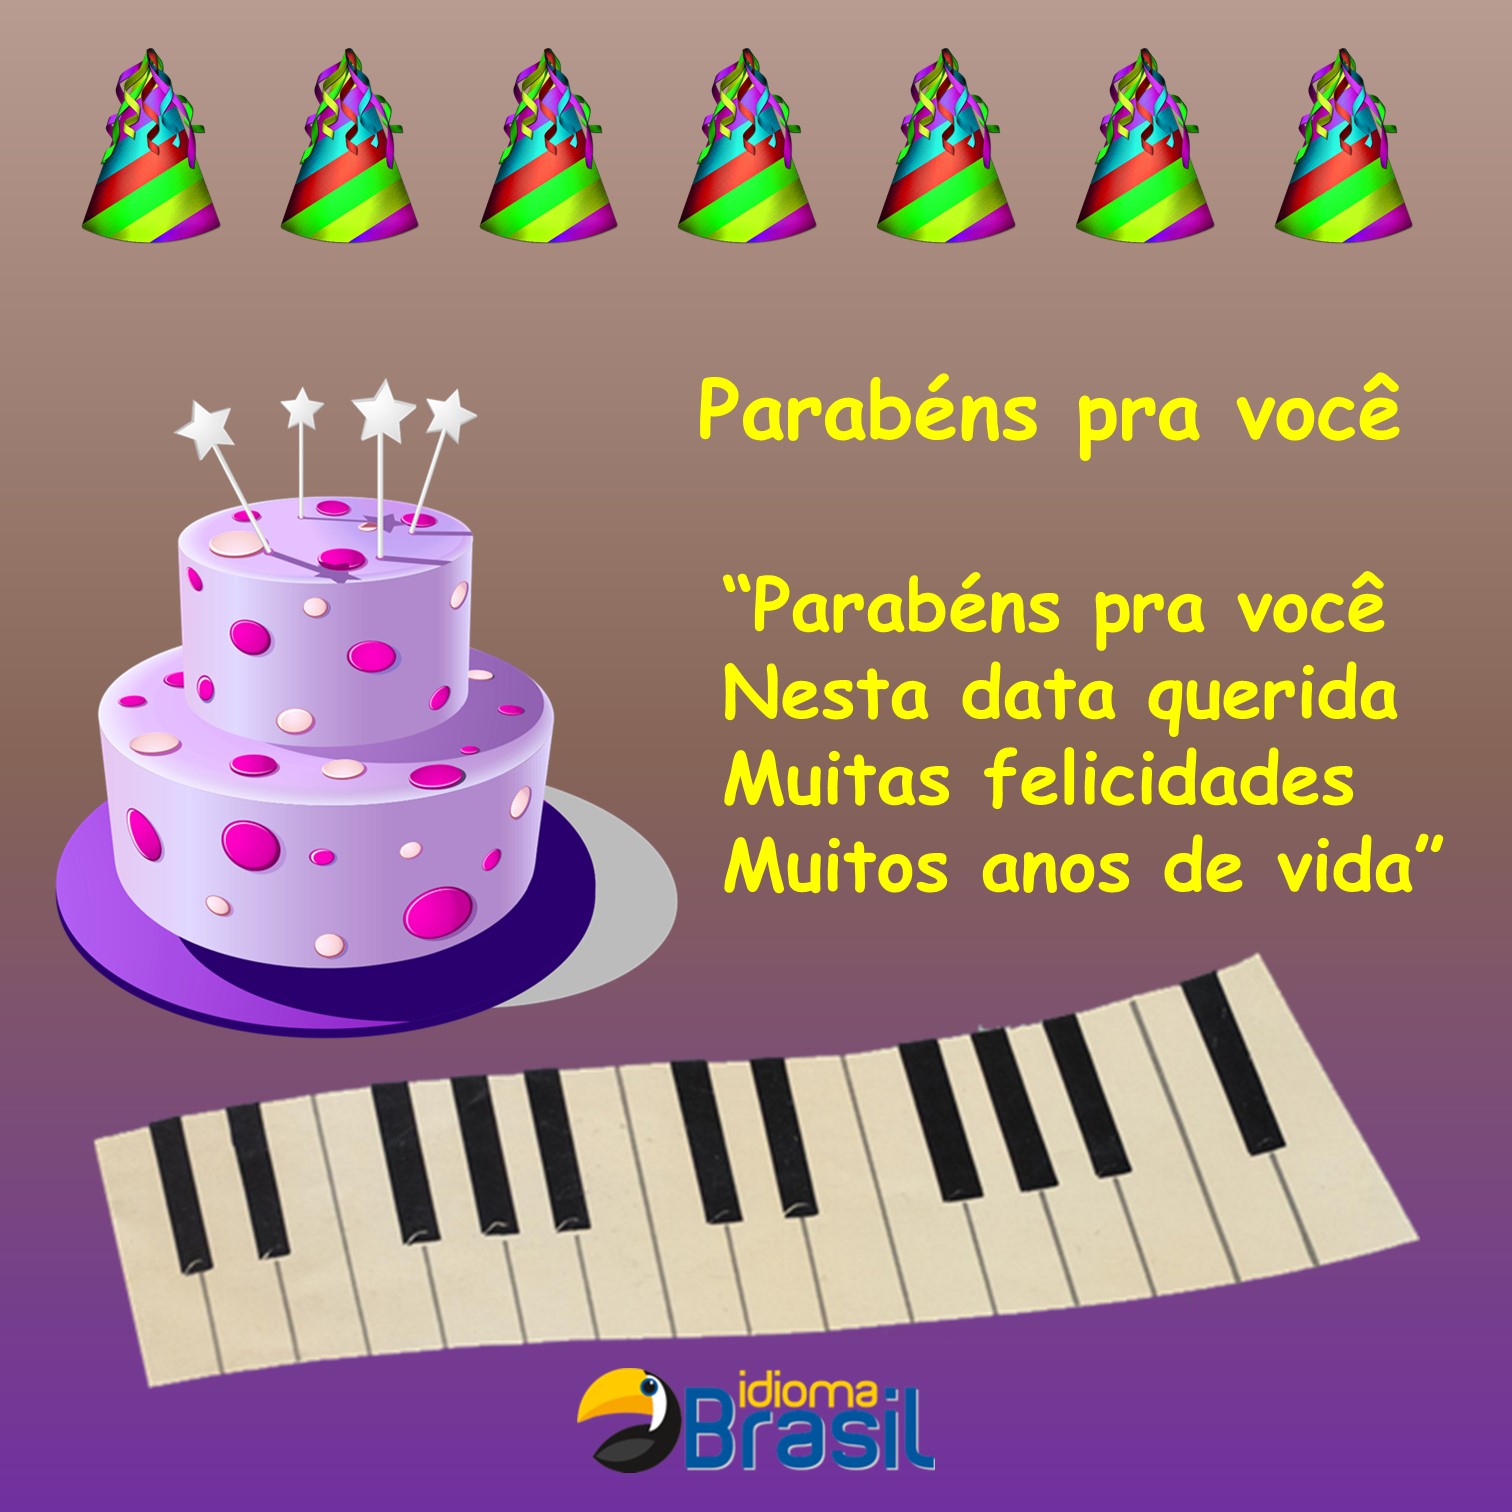 Parabens Pra Voce Musica Download